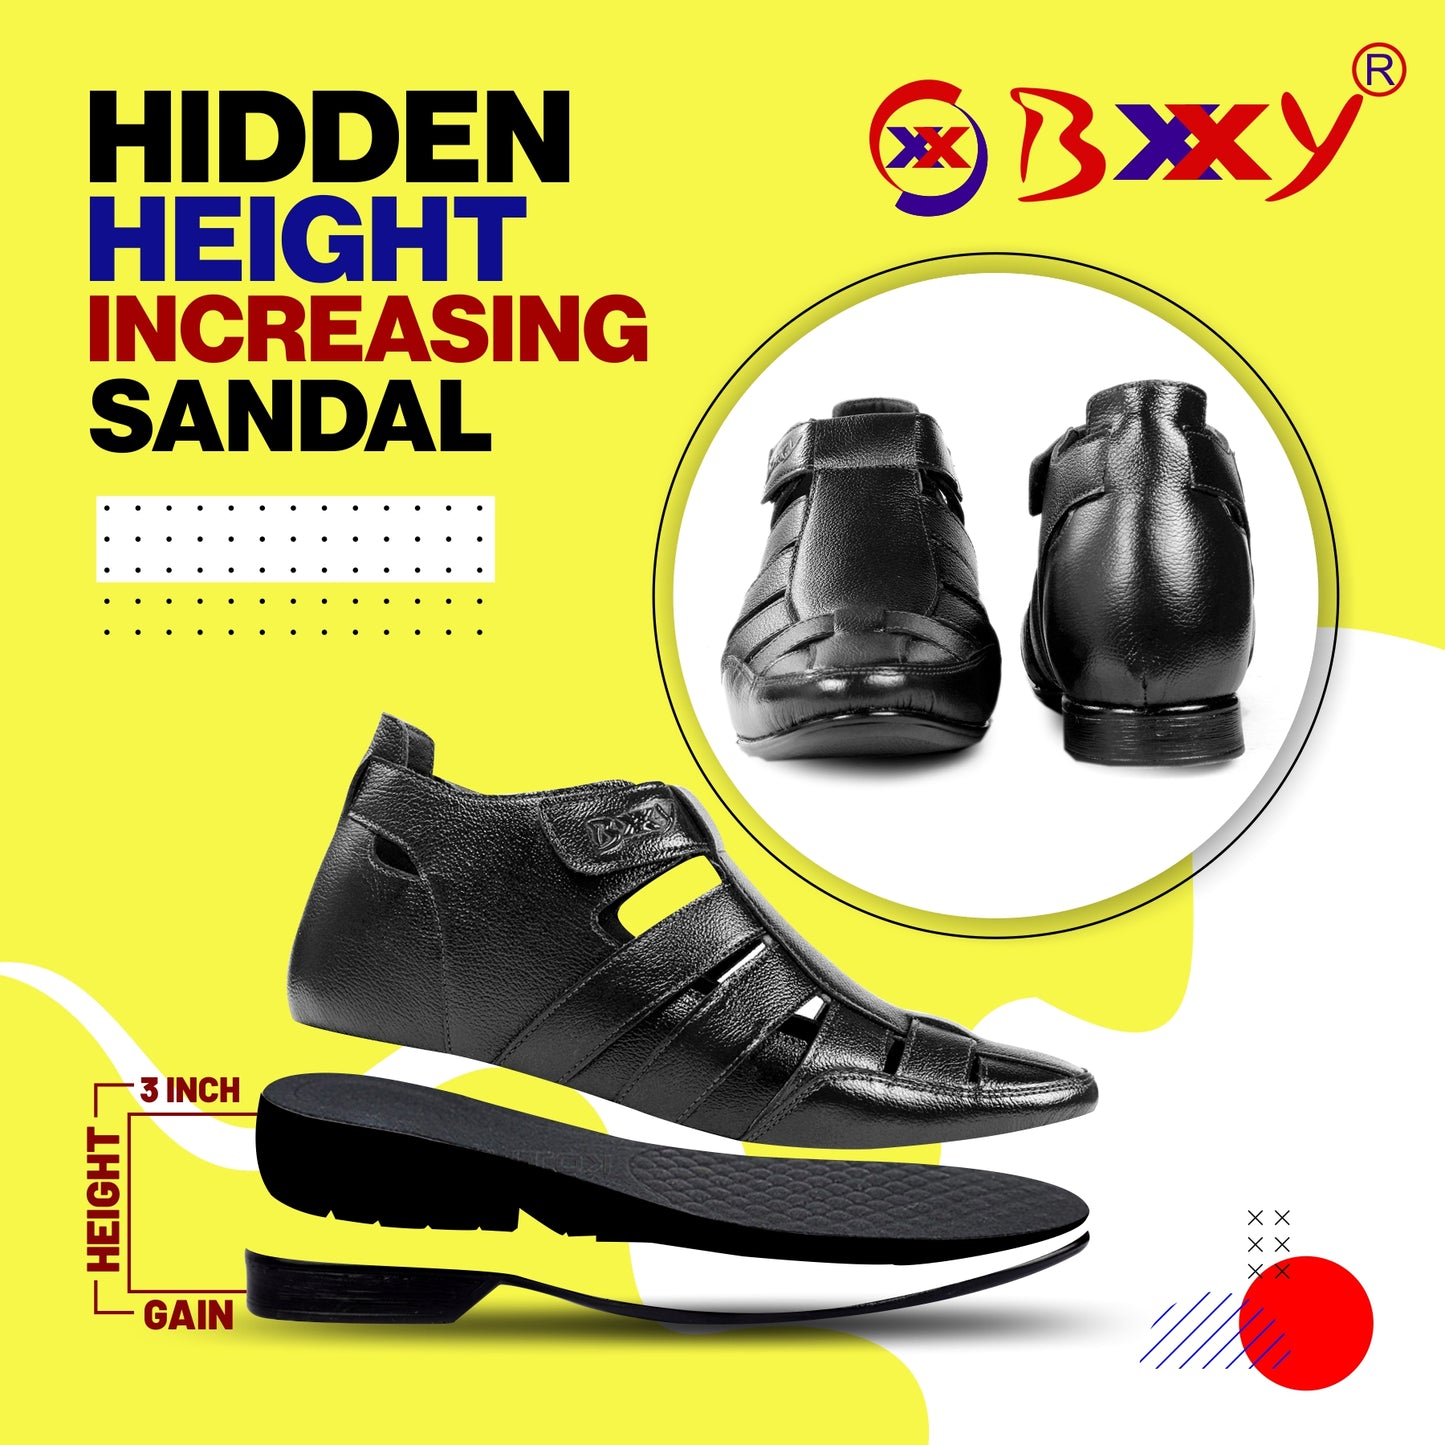 BXXY Men's 3 Inch Elevator Formal Roman Sandals